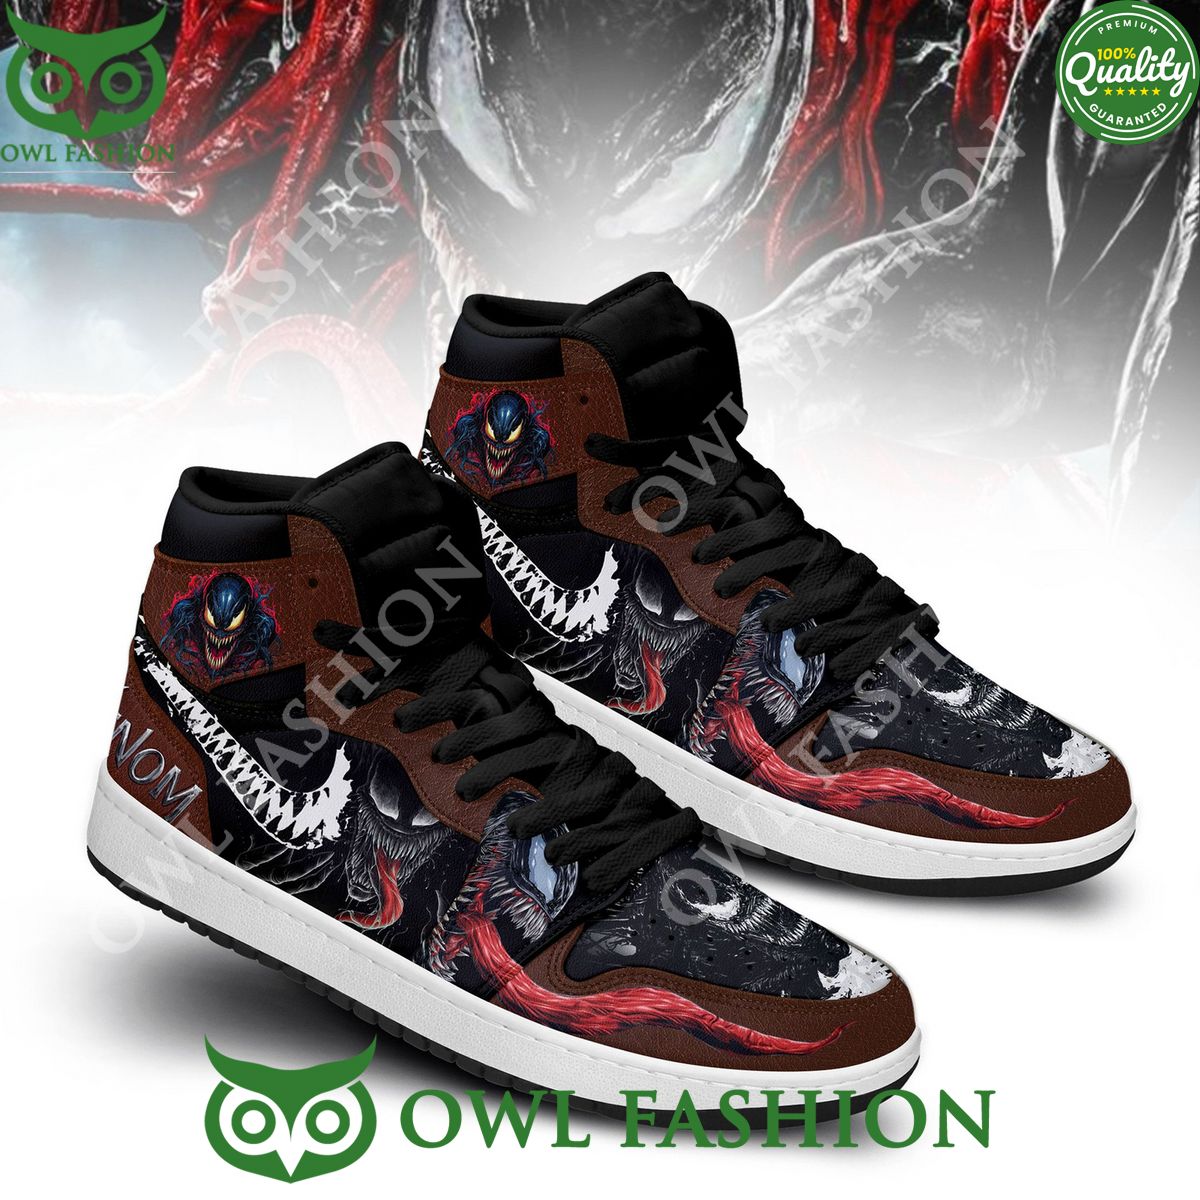 Venom Scary Red tongue Air Jordan High Top Sneakers Amazing Pic